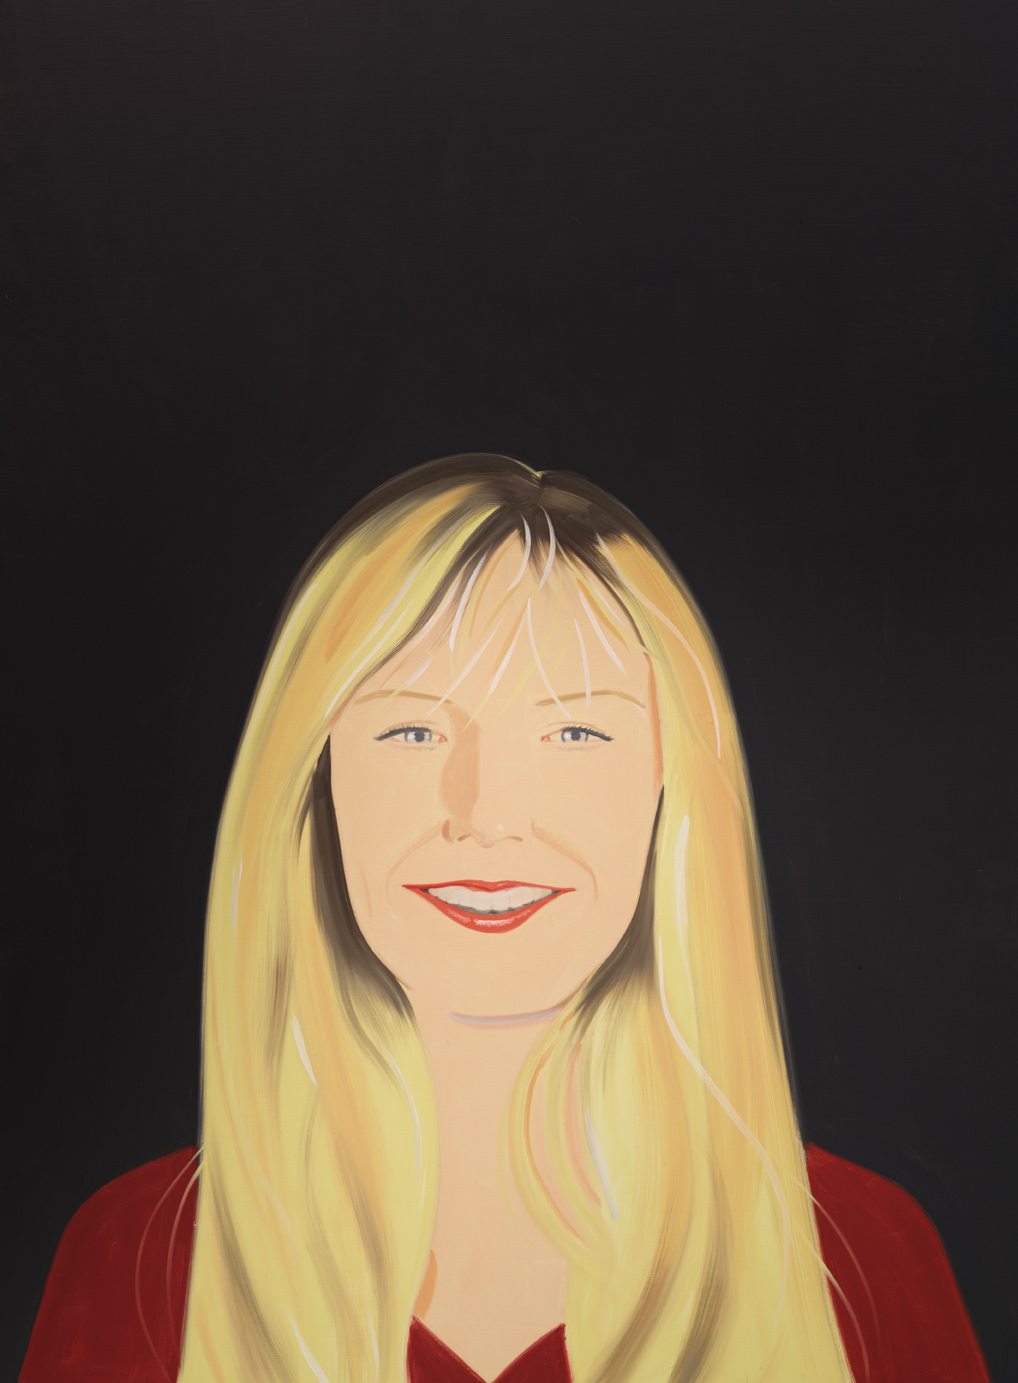 Karen souriante | Alex Katz | Guggenheim Bilbao Museoa